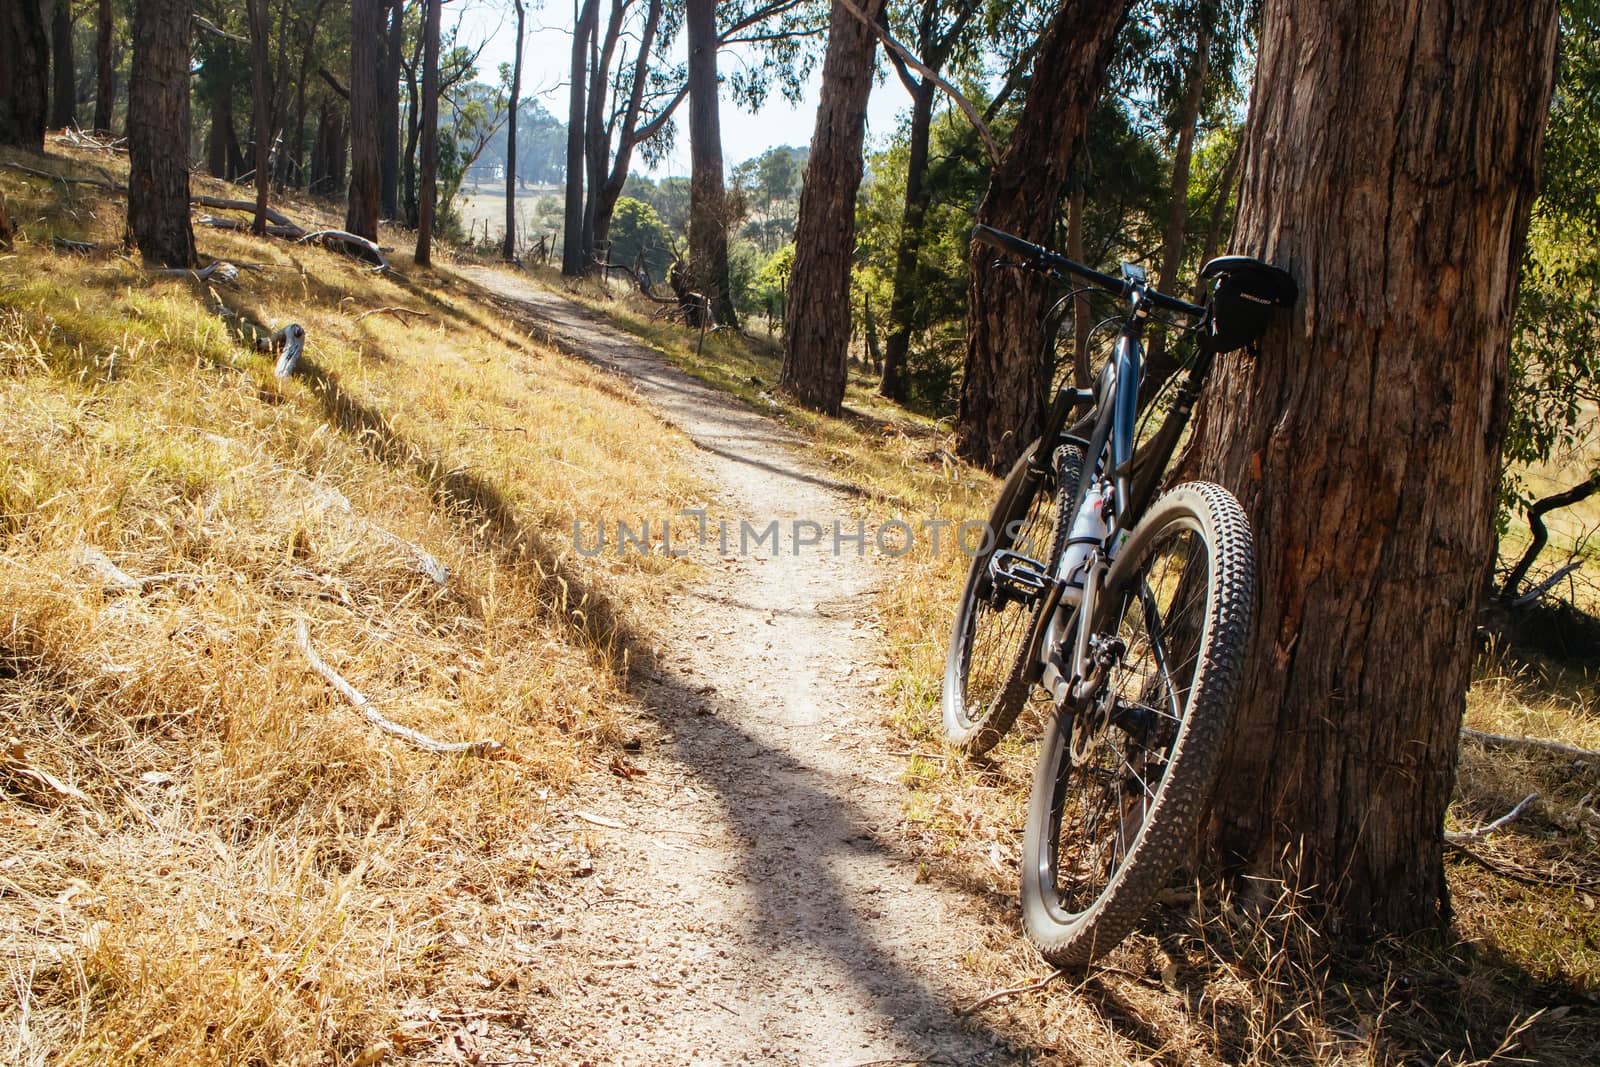 Smiths Gully, Australia - January 26 2016: The popular Smiths Gully trails near Melbourne in Victoria, Australia